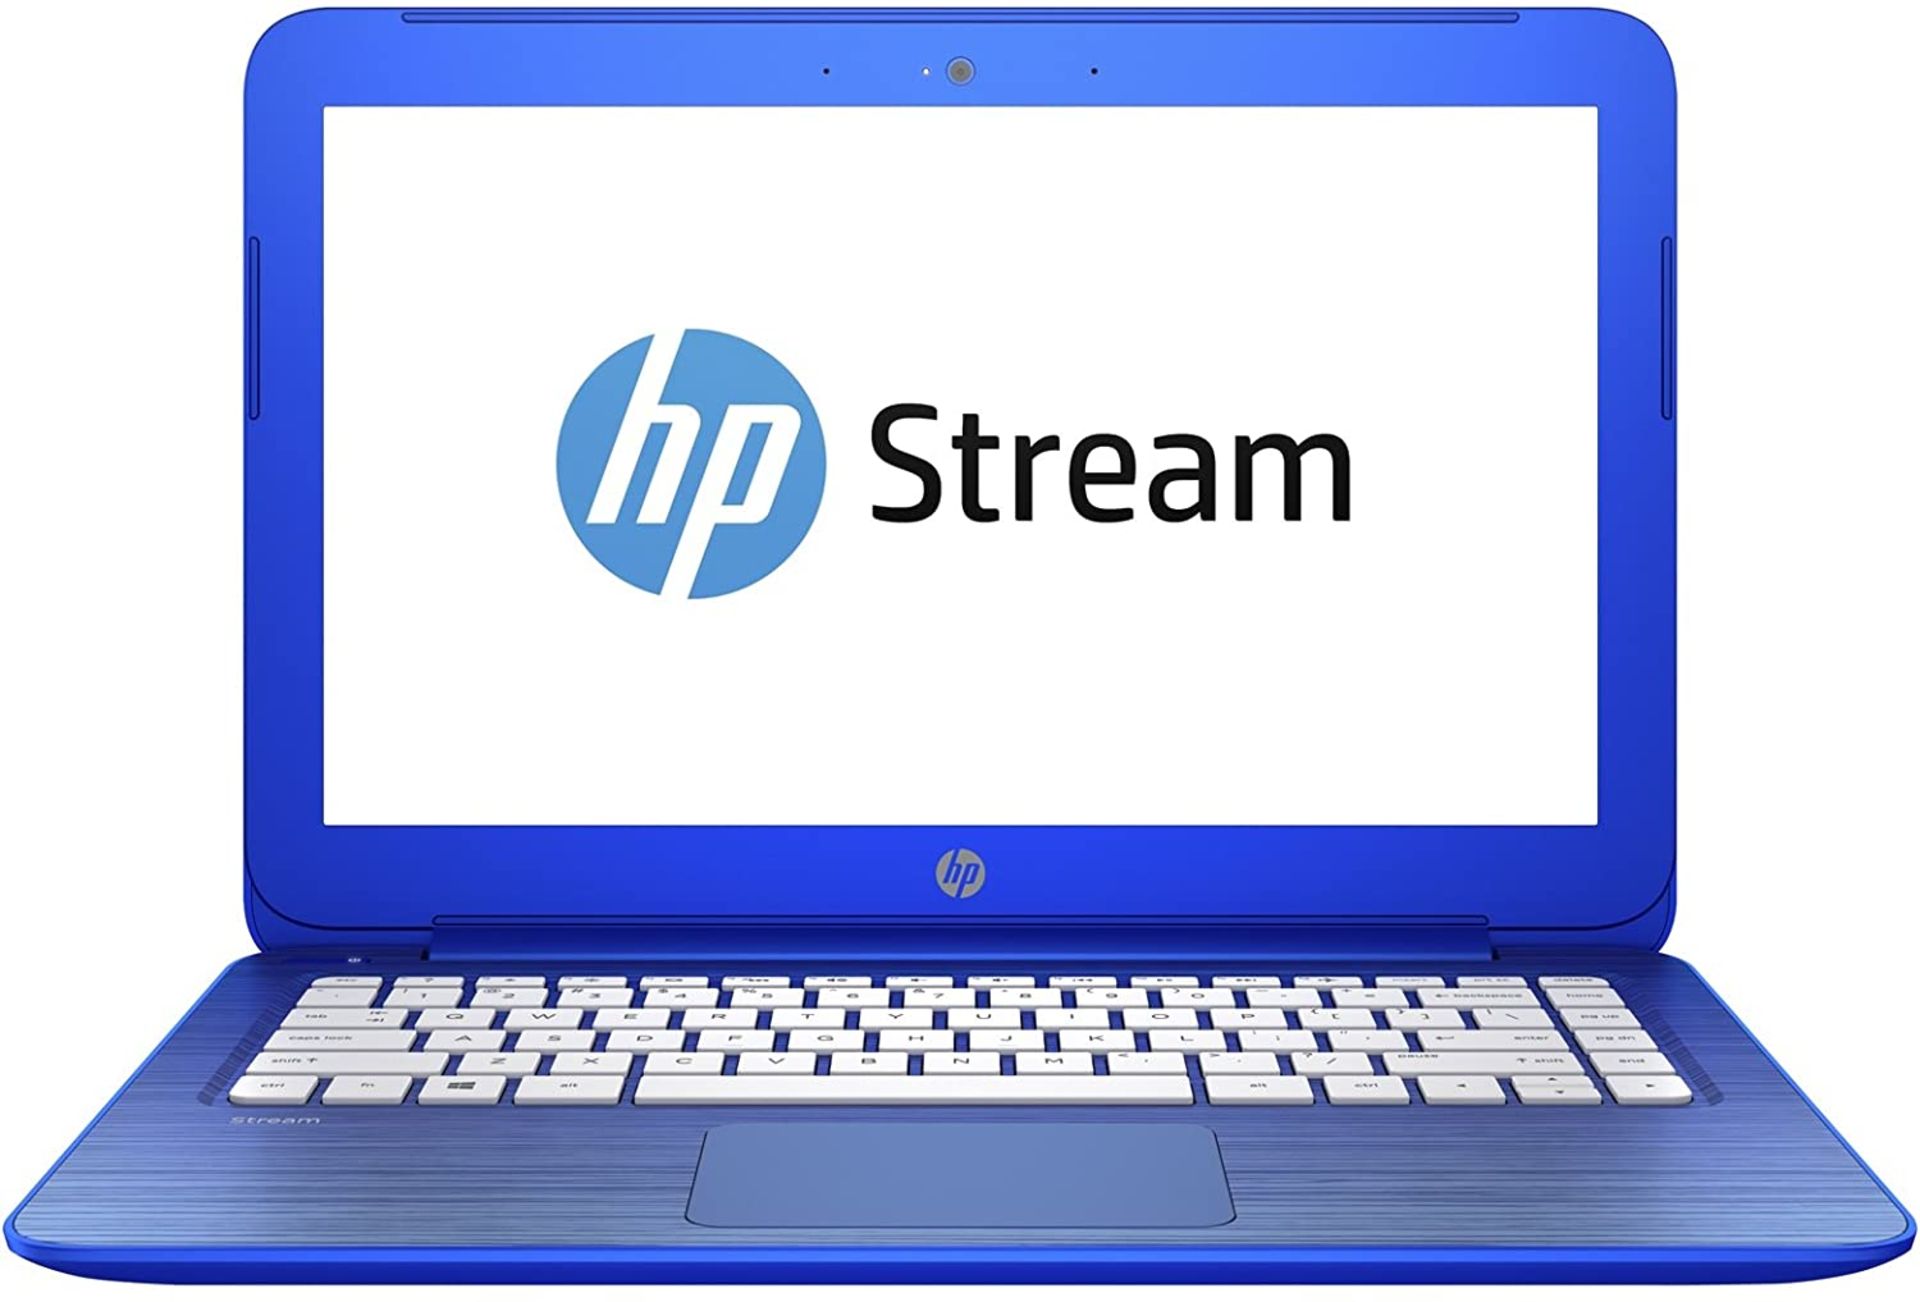 (T3) 1 x GRADE B - HP Stream 13.3" Laptop - Intel Celeron N3050 with Intel HD Graphics (1.6 GHz...